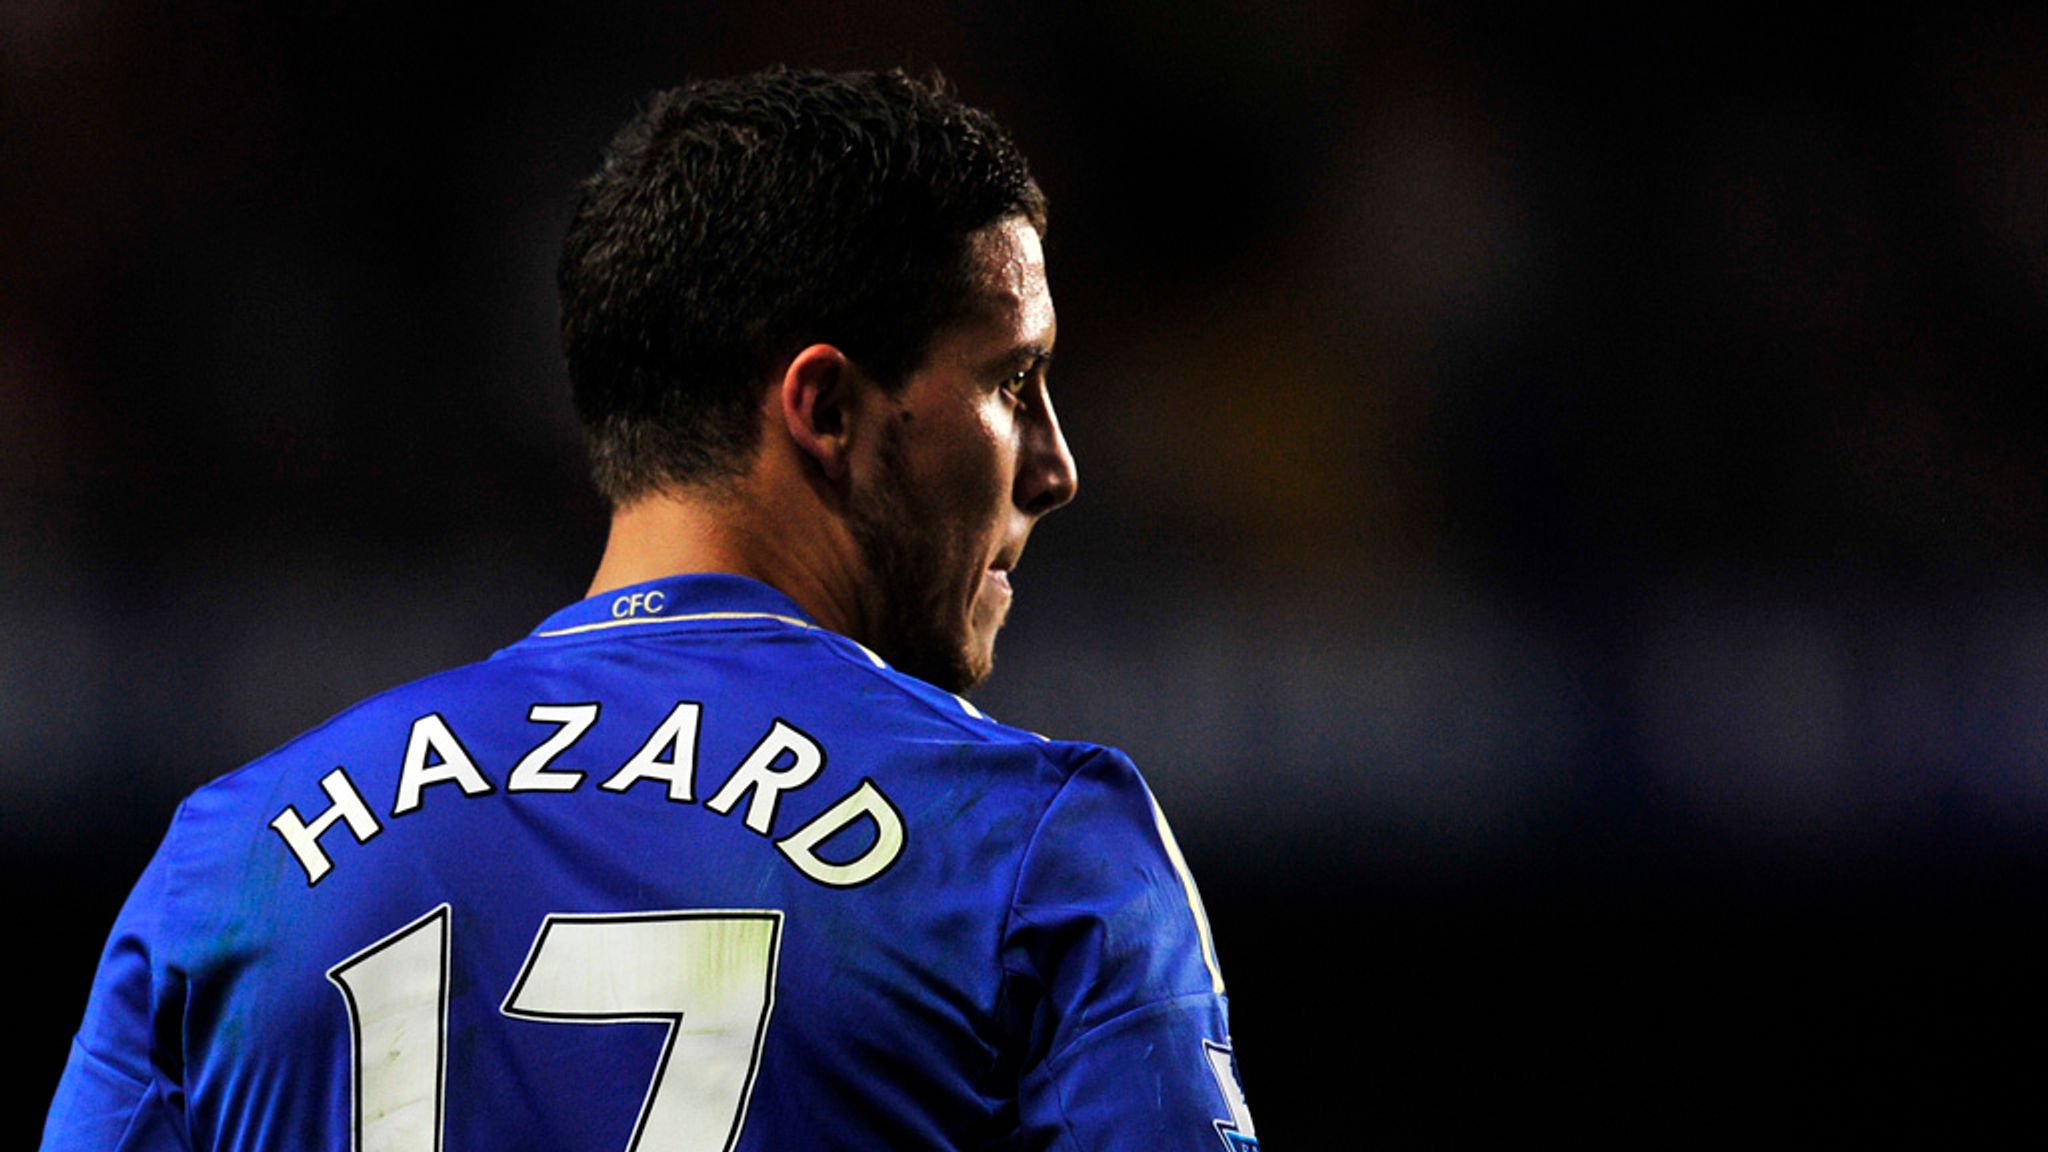 Hazard happy he has adapted | Football News | Sky Sports